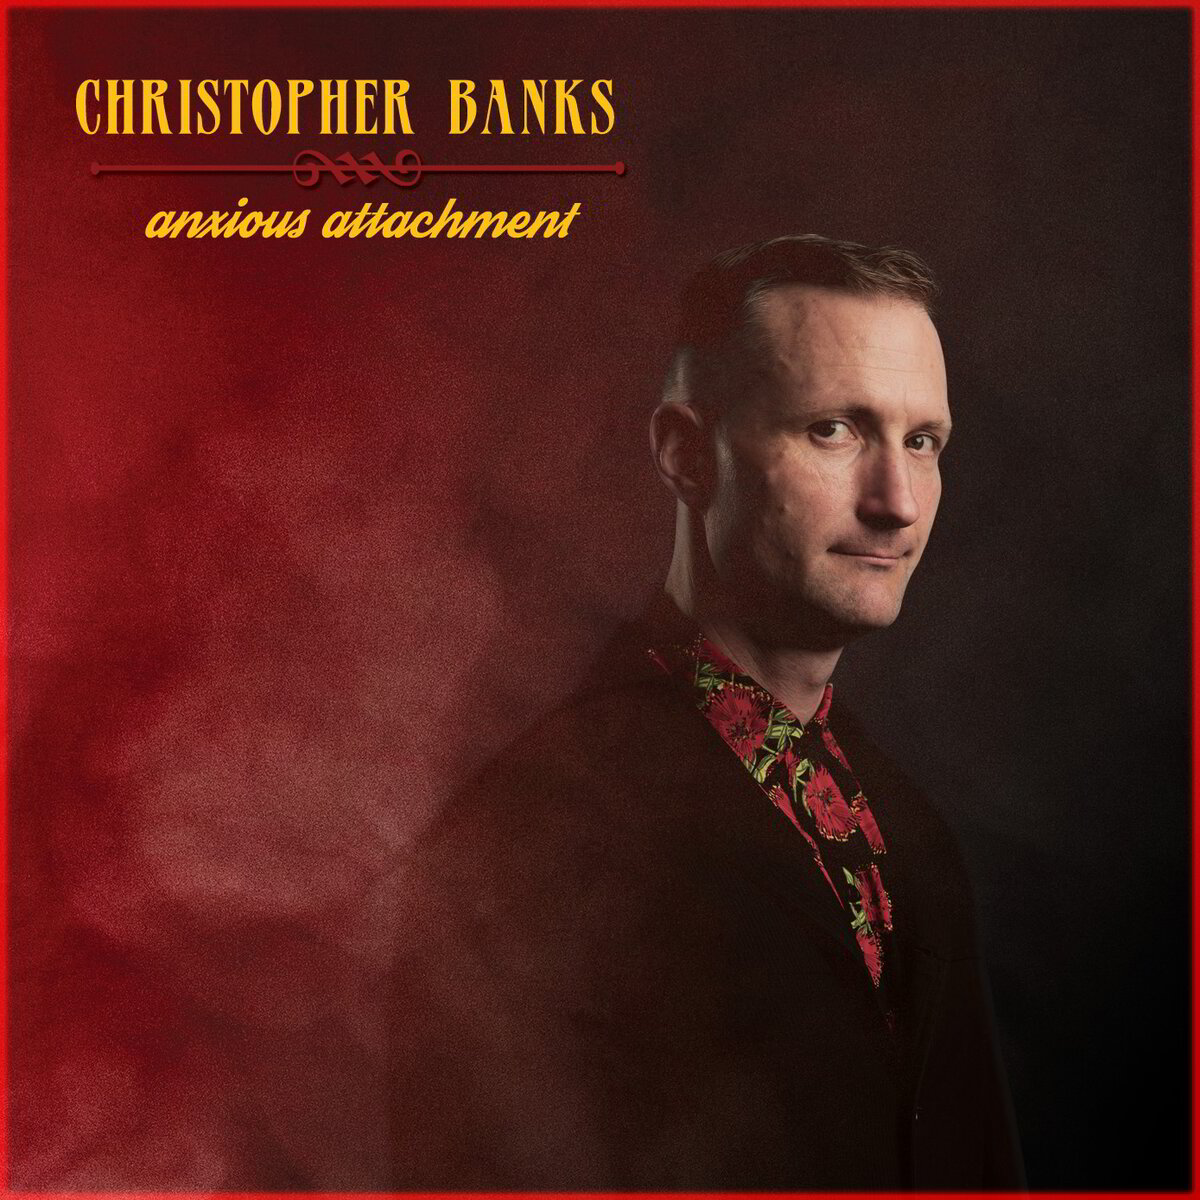 Christopher Banks | Singer-songwriter | Vintage 70s-styled soft rock tunes